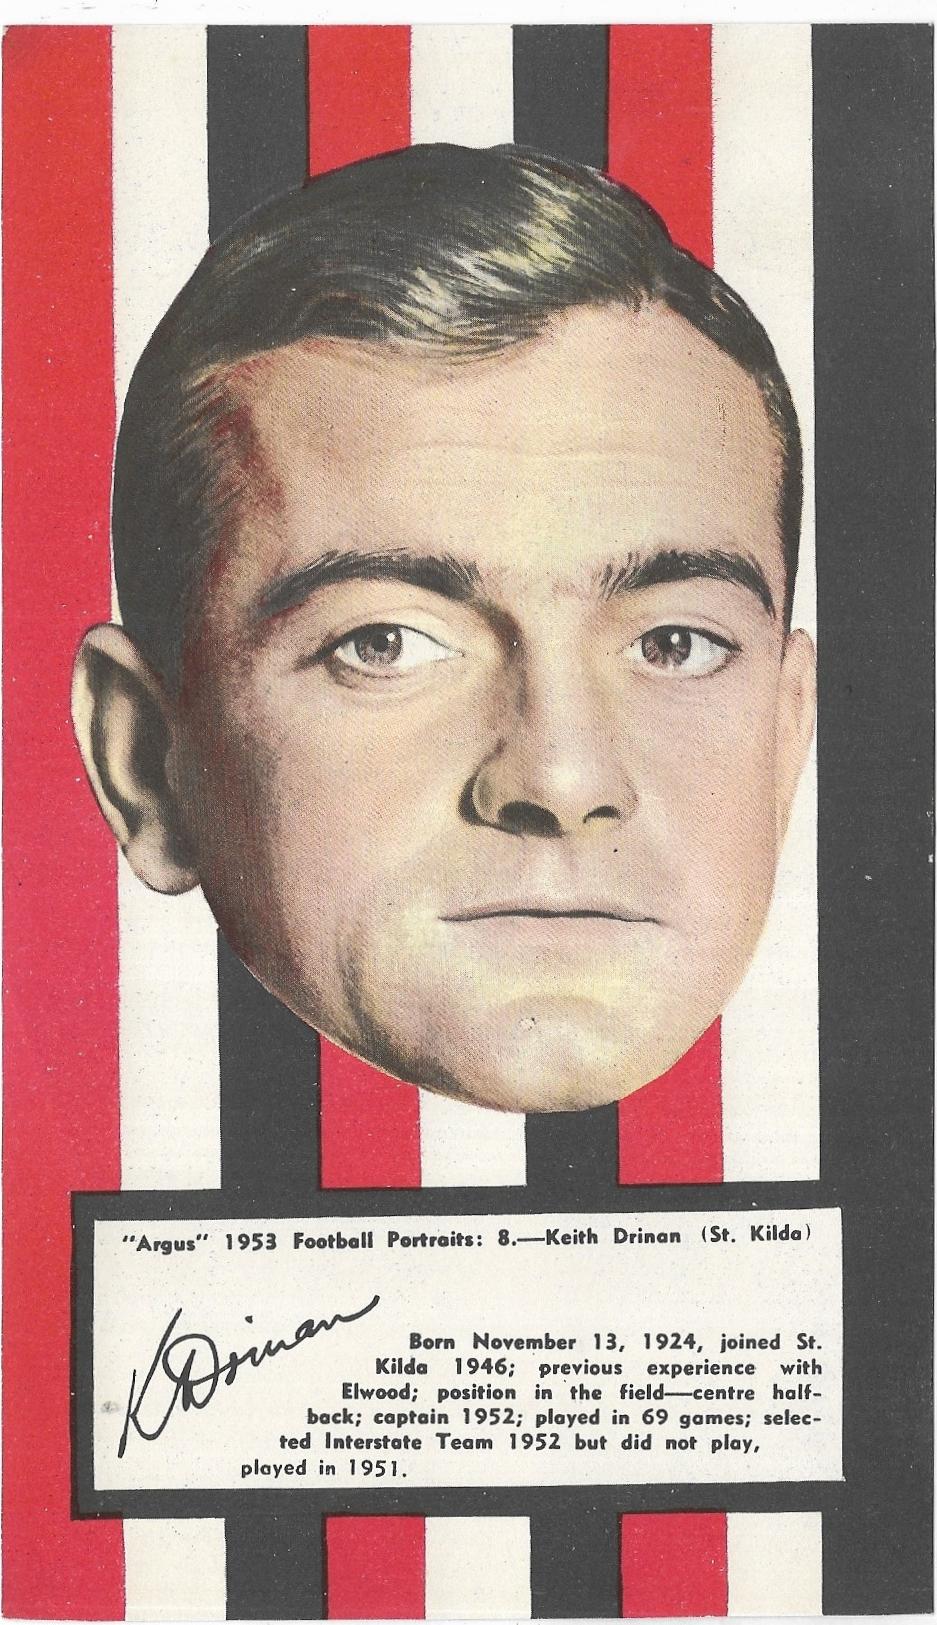 1953 Argus Football Portraits (8) Keith Drinan St. Kilda